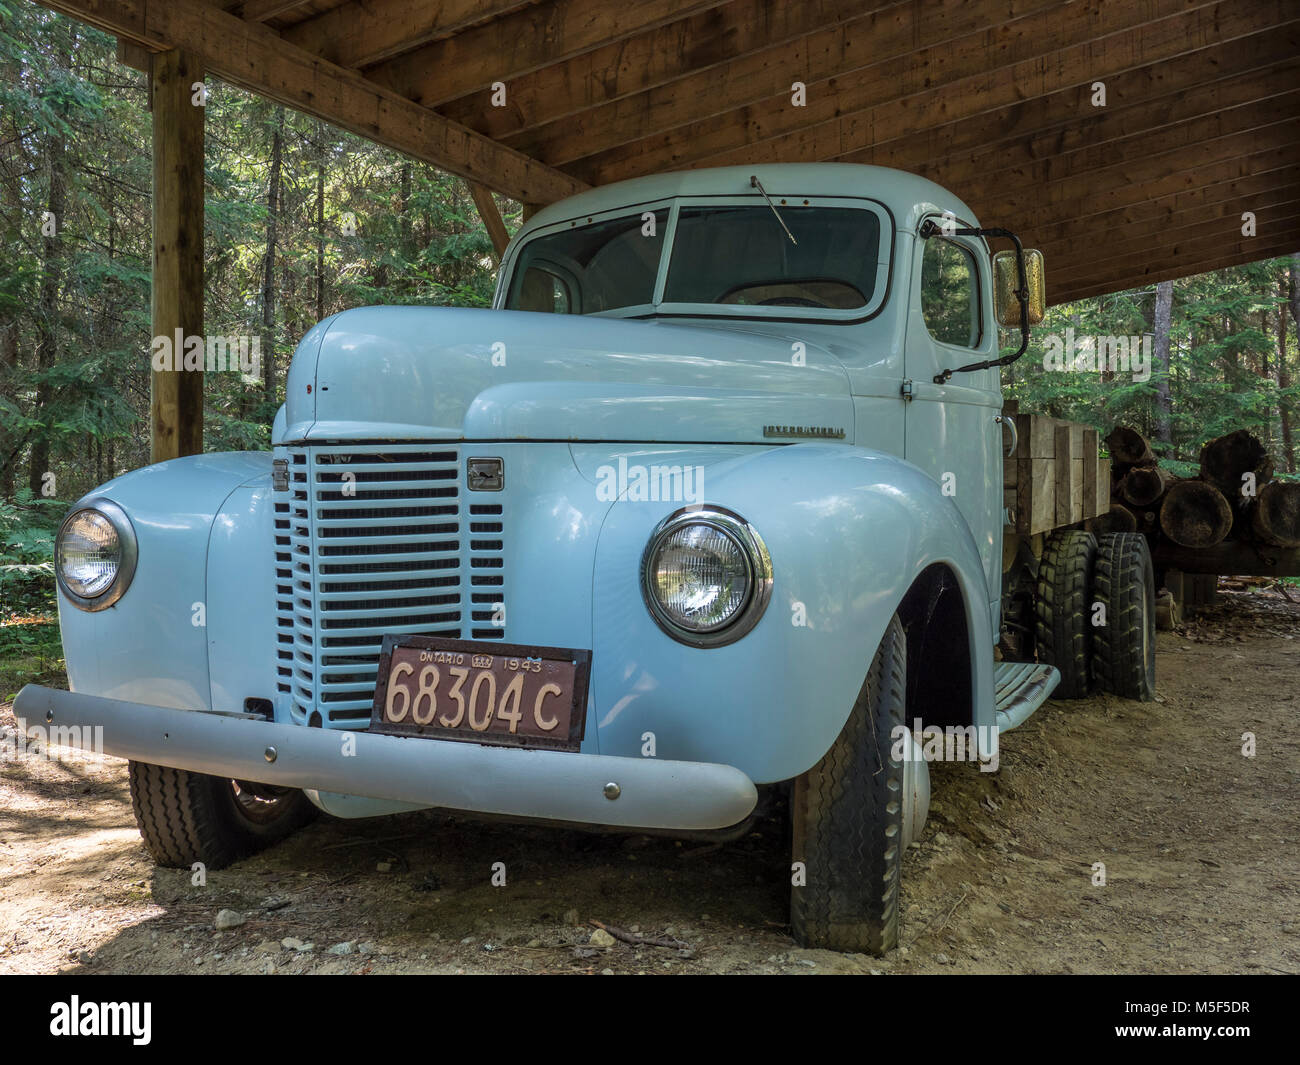 International Harvester truck, Algonquin Logging Museum, Algonquin Provincial Park, Ontario, Canada. Stock Photo